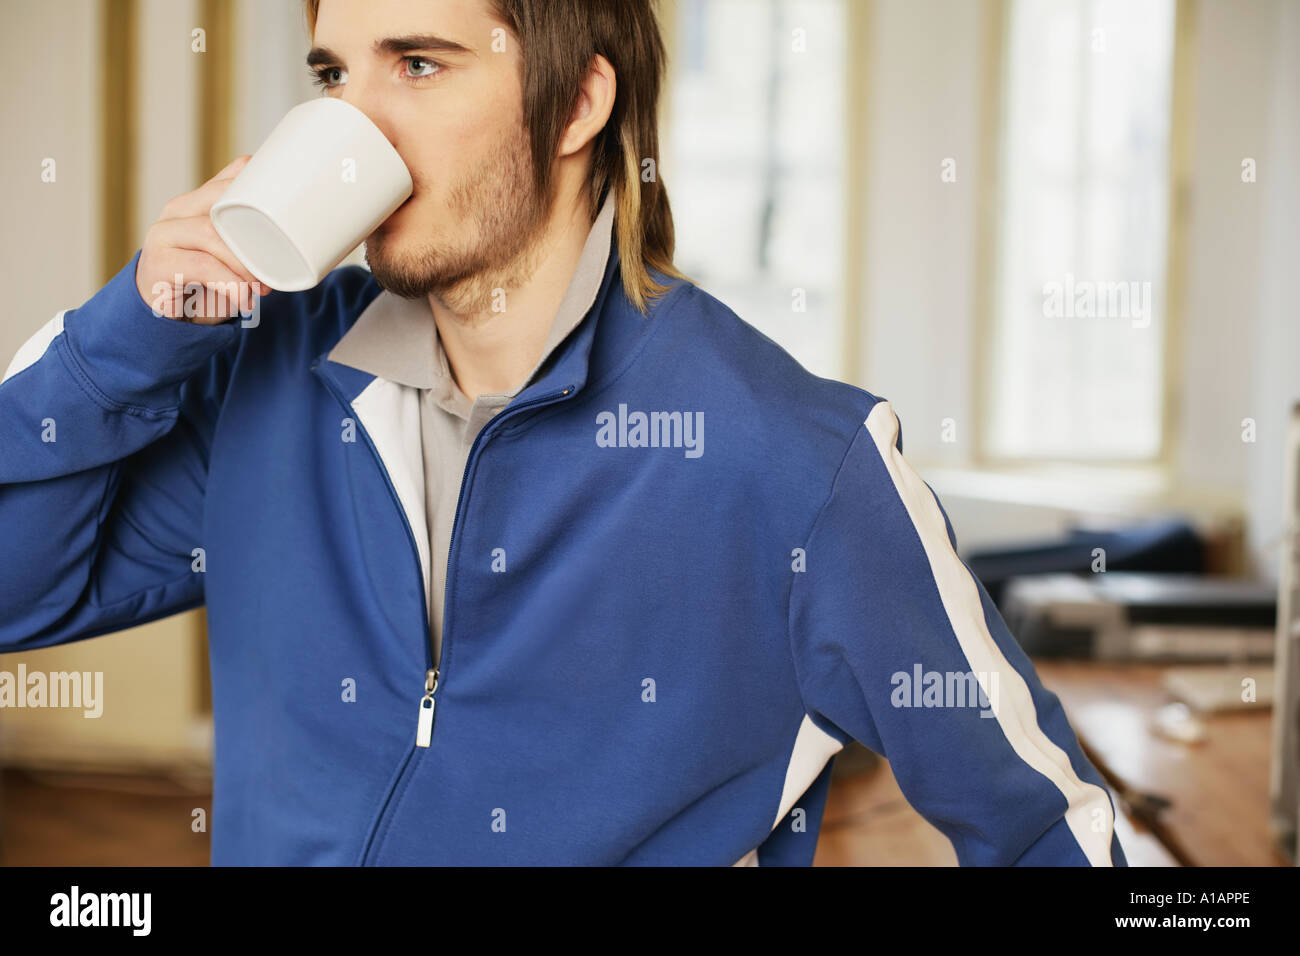 Man drinking coffee Stock Photo